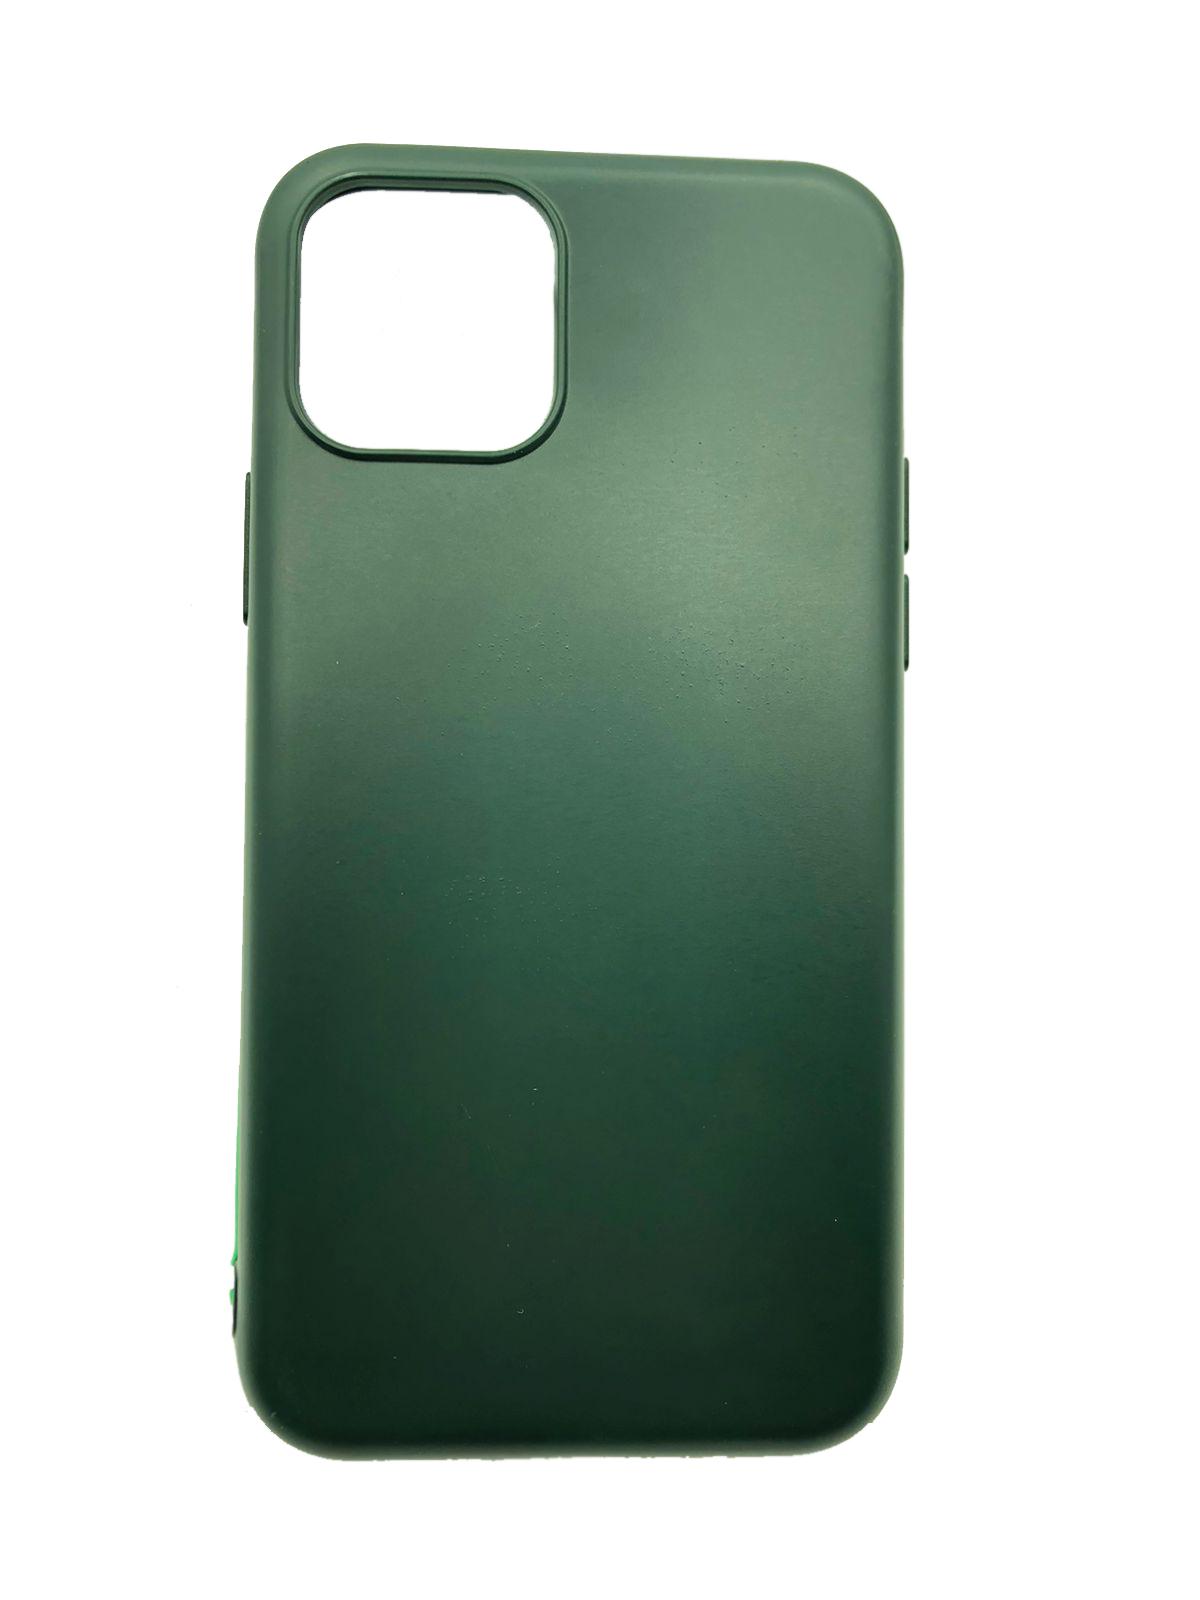 Silicone Case iPHONE 11 PRO DARK GREEN